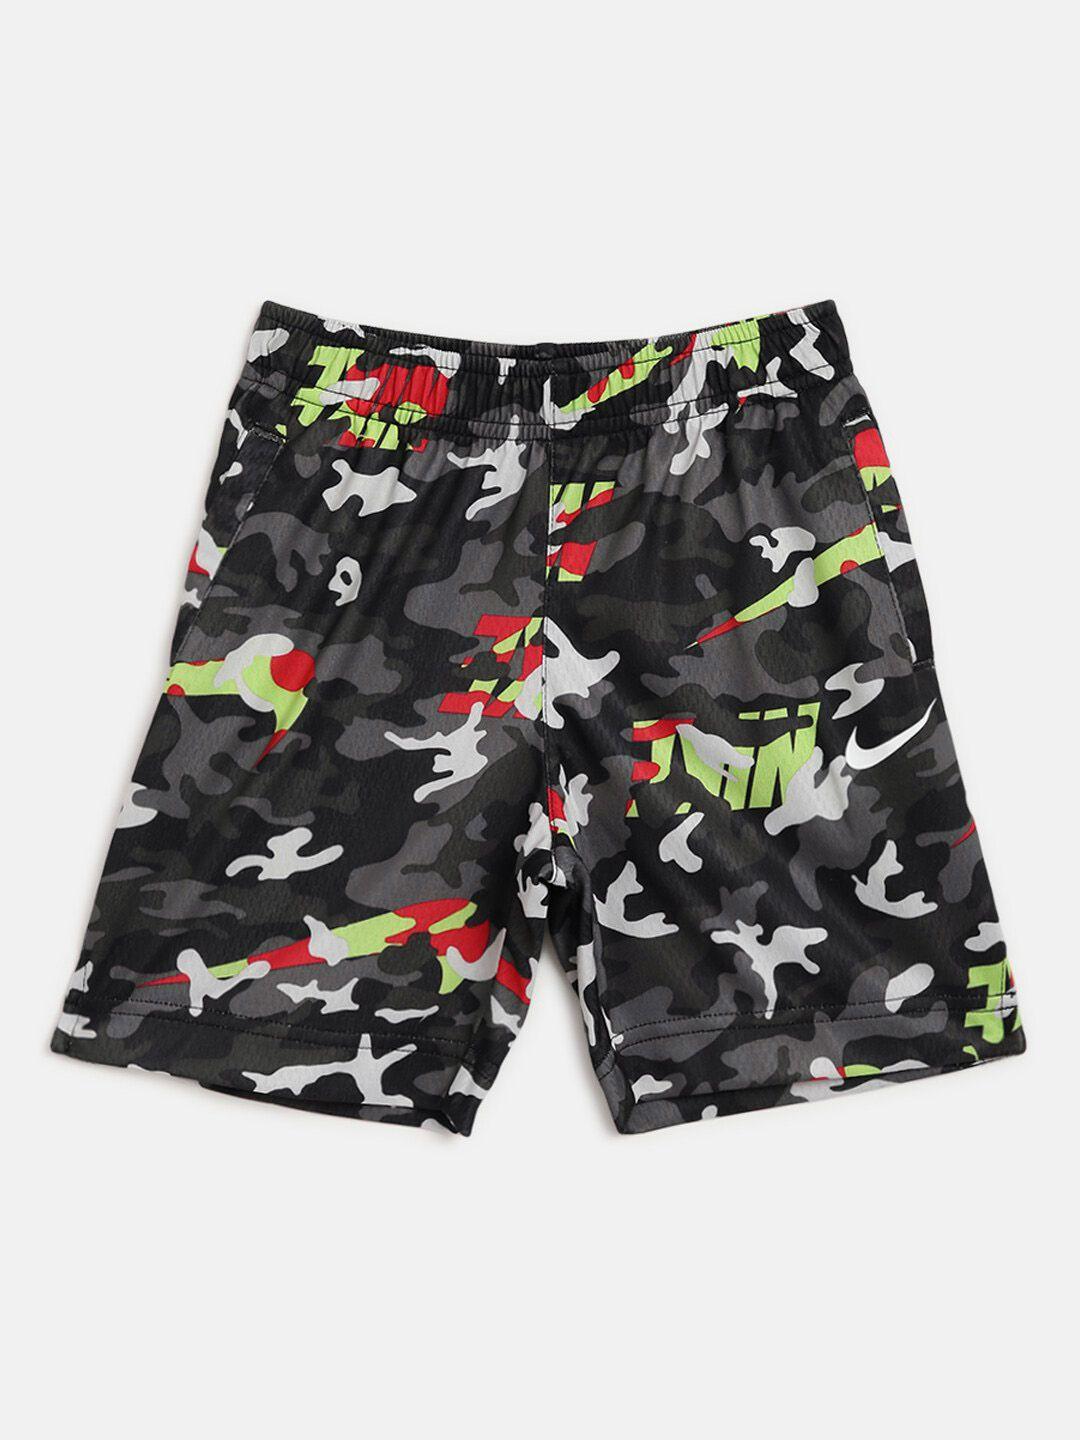 nike boys charcoal grey & black dry camouflage print sports shorts